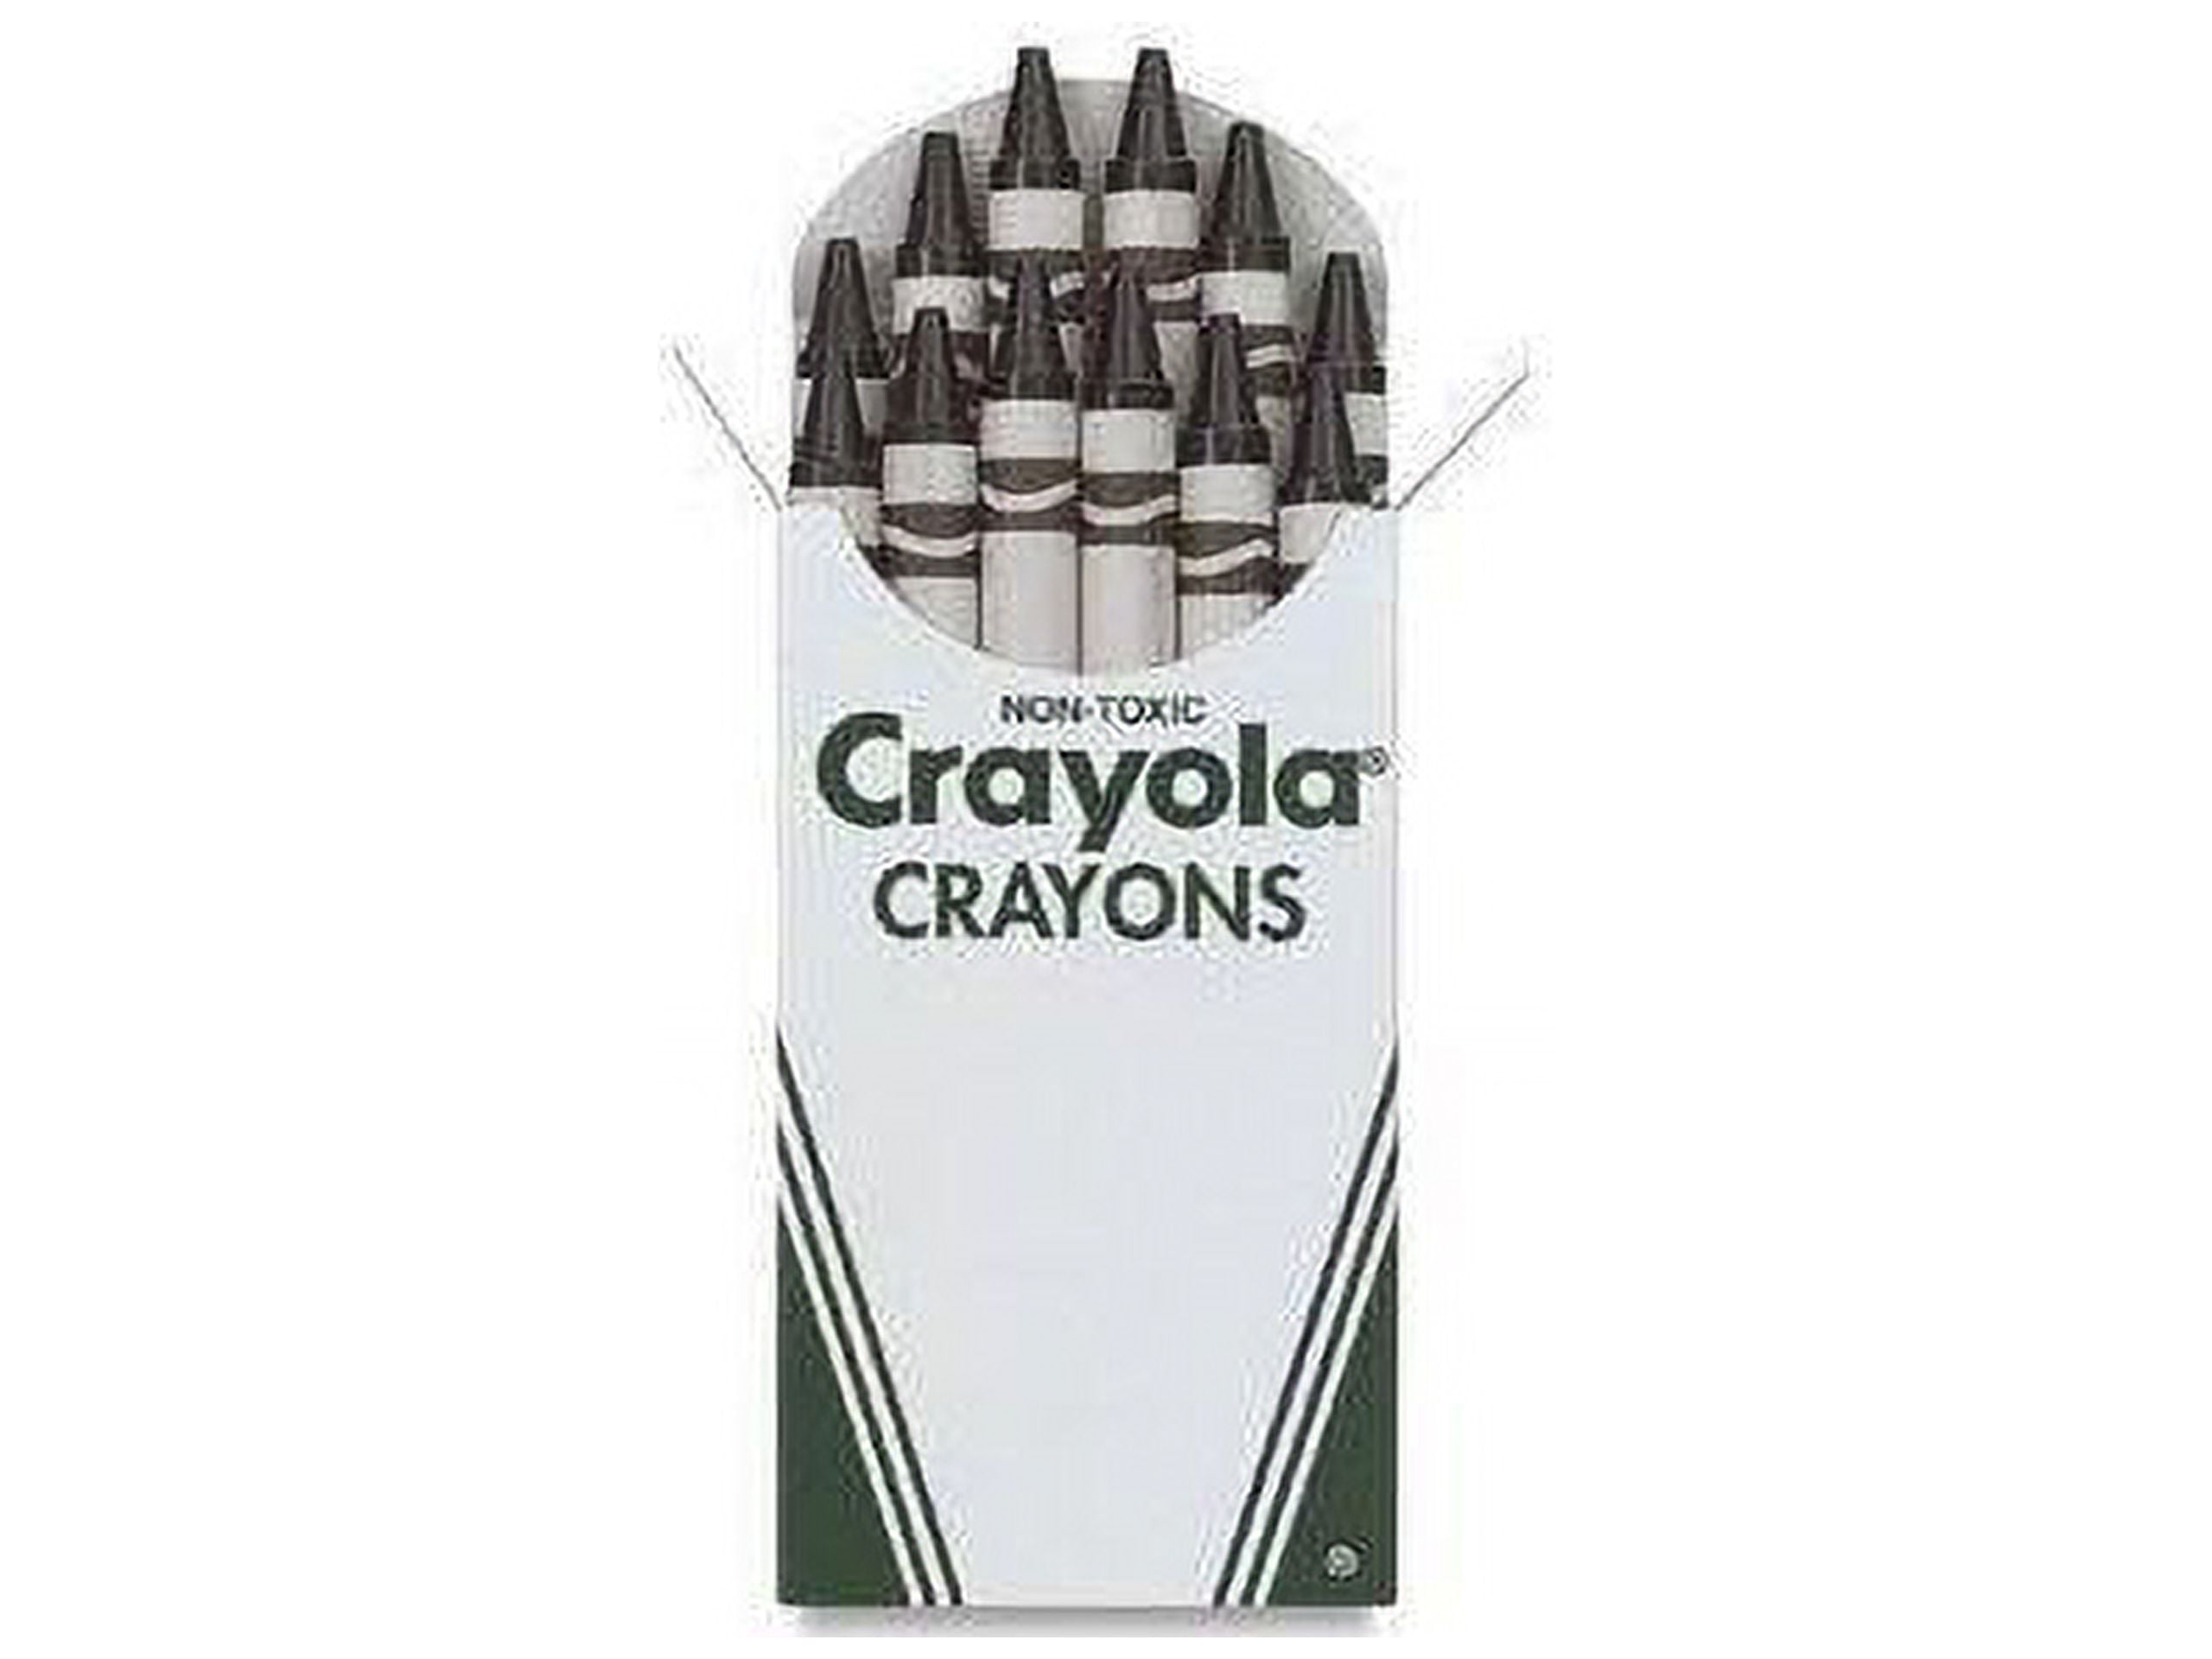 Crayola Ultimate Crayon Box Collection (152ct), Bulk Kids Crayon